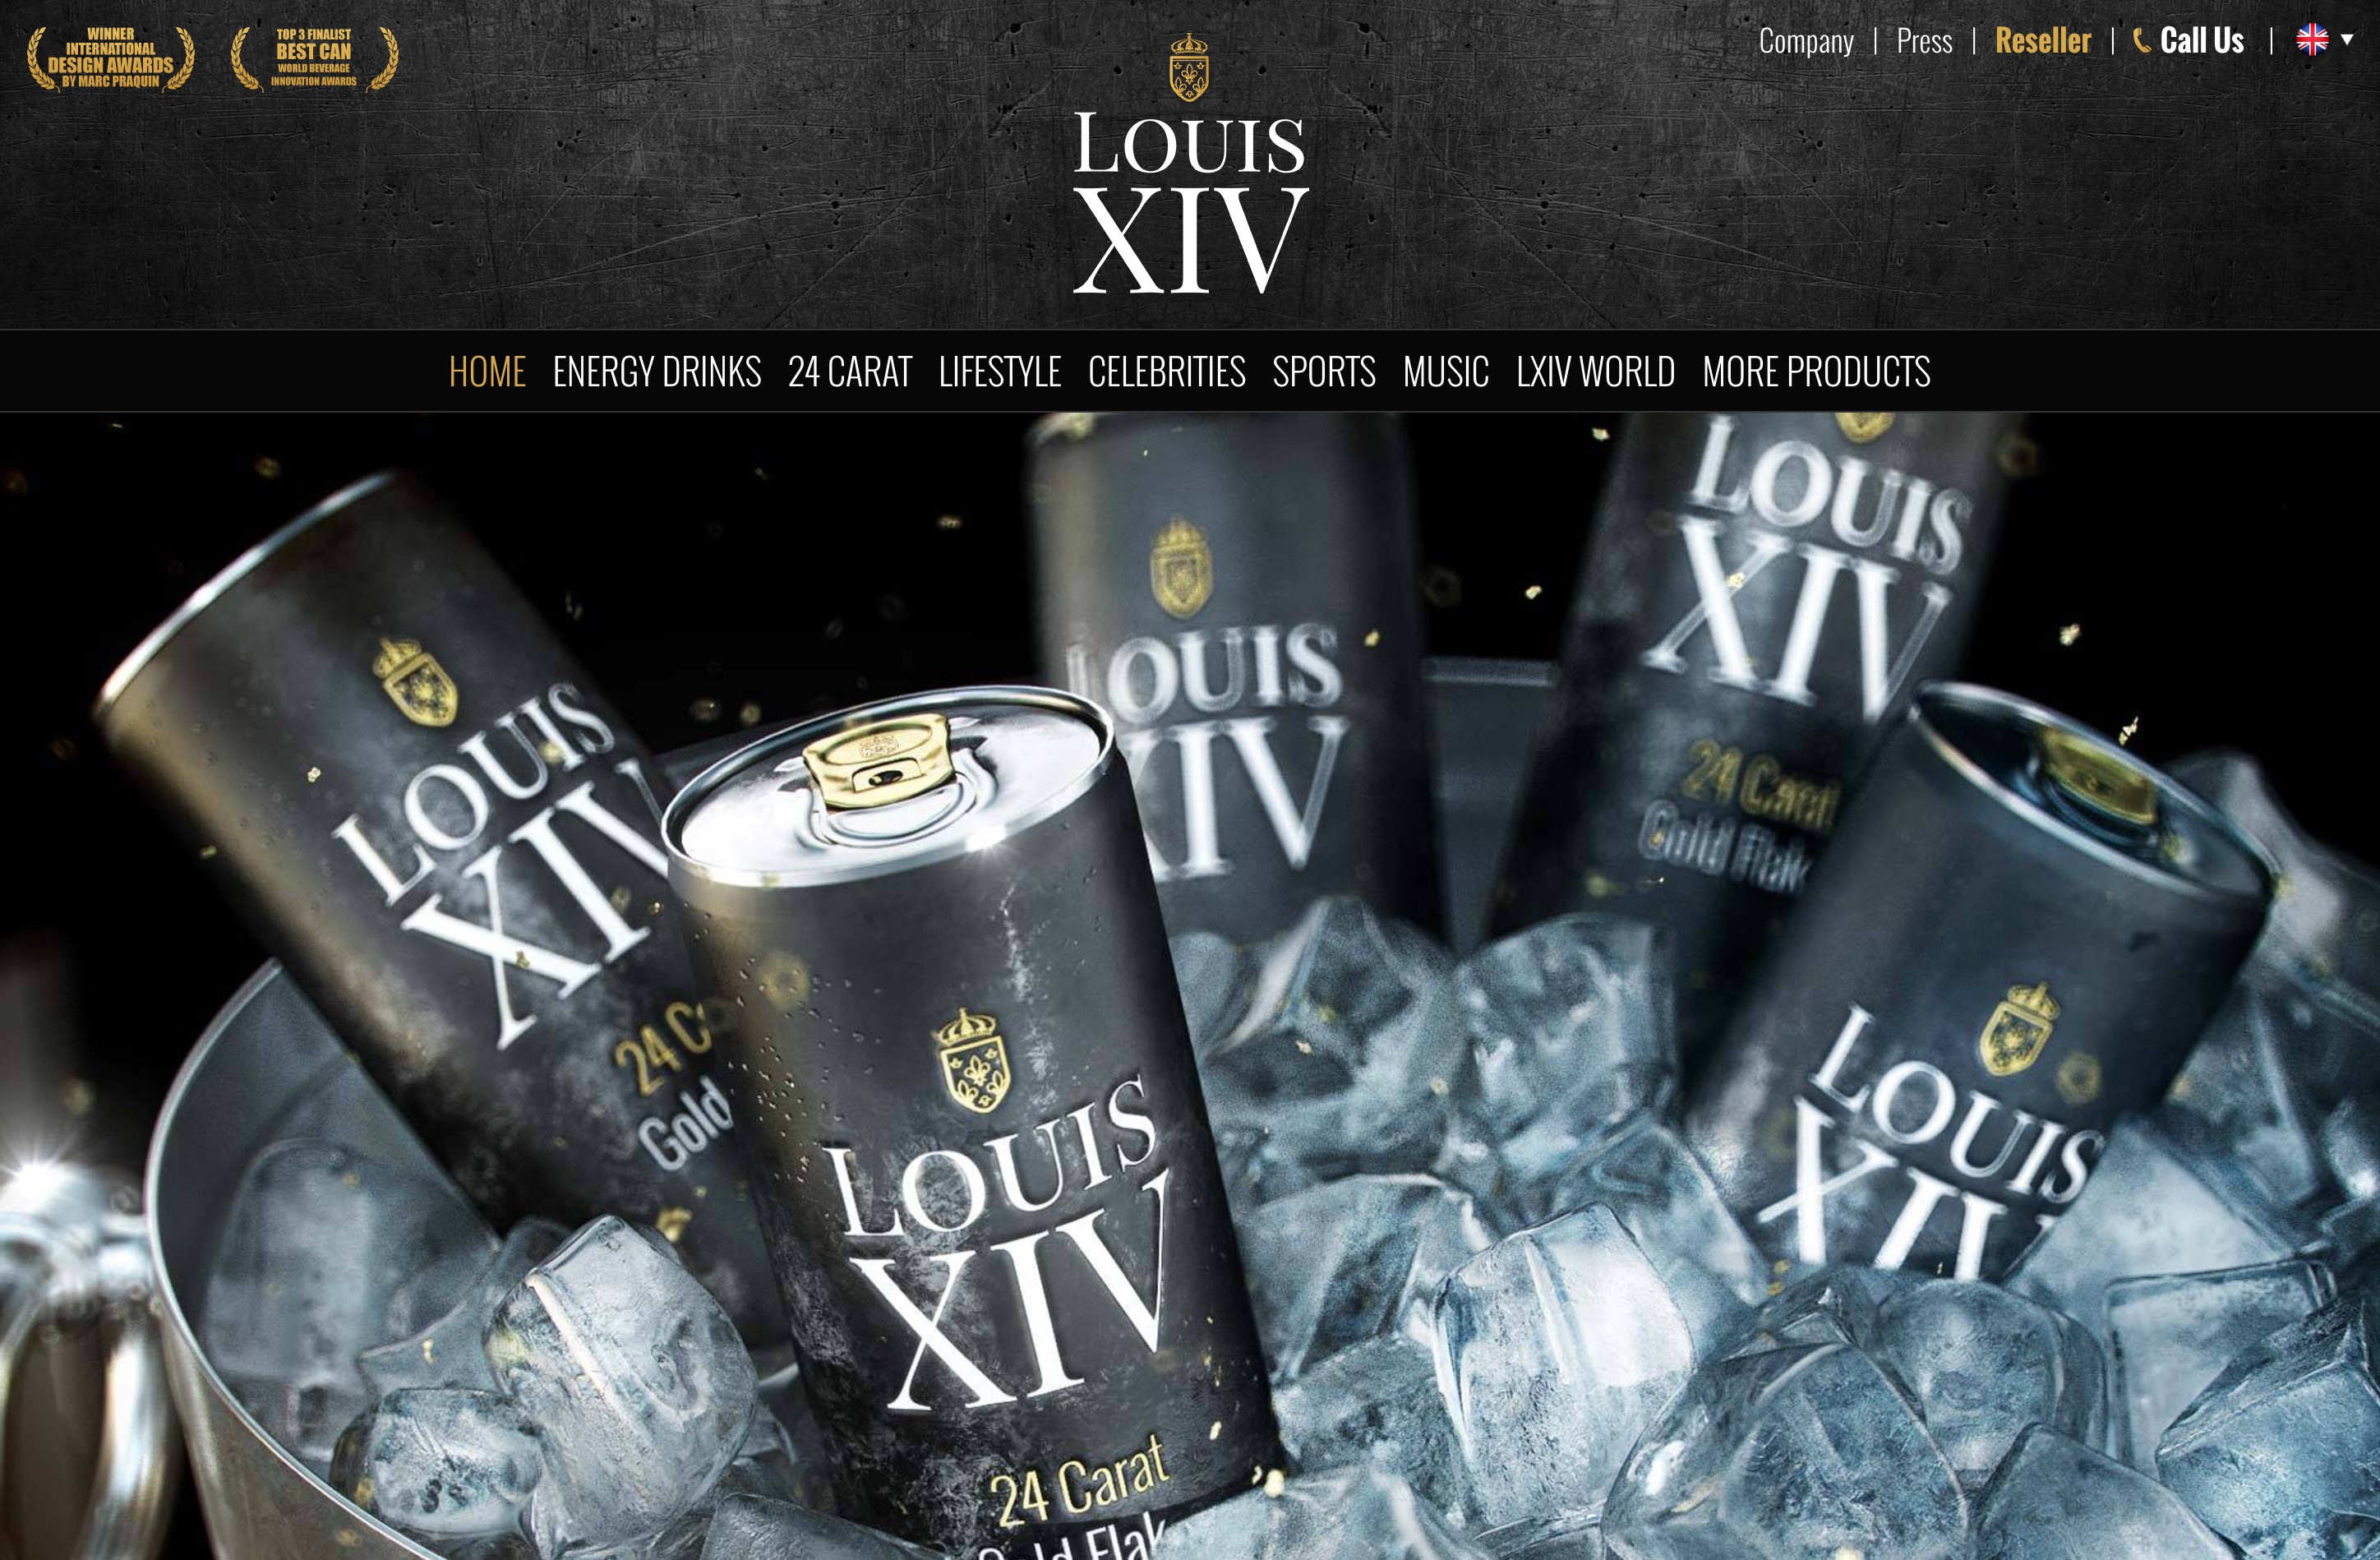 LOUIS XIV Energy - Home